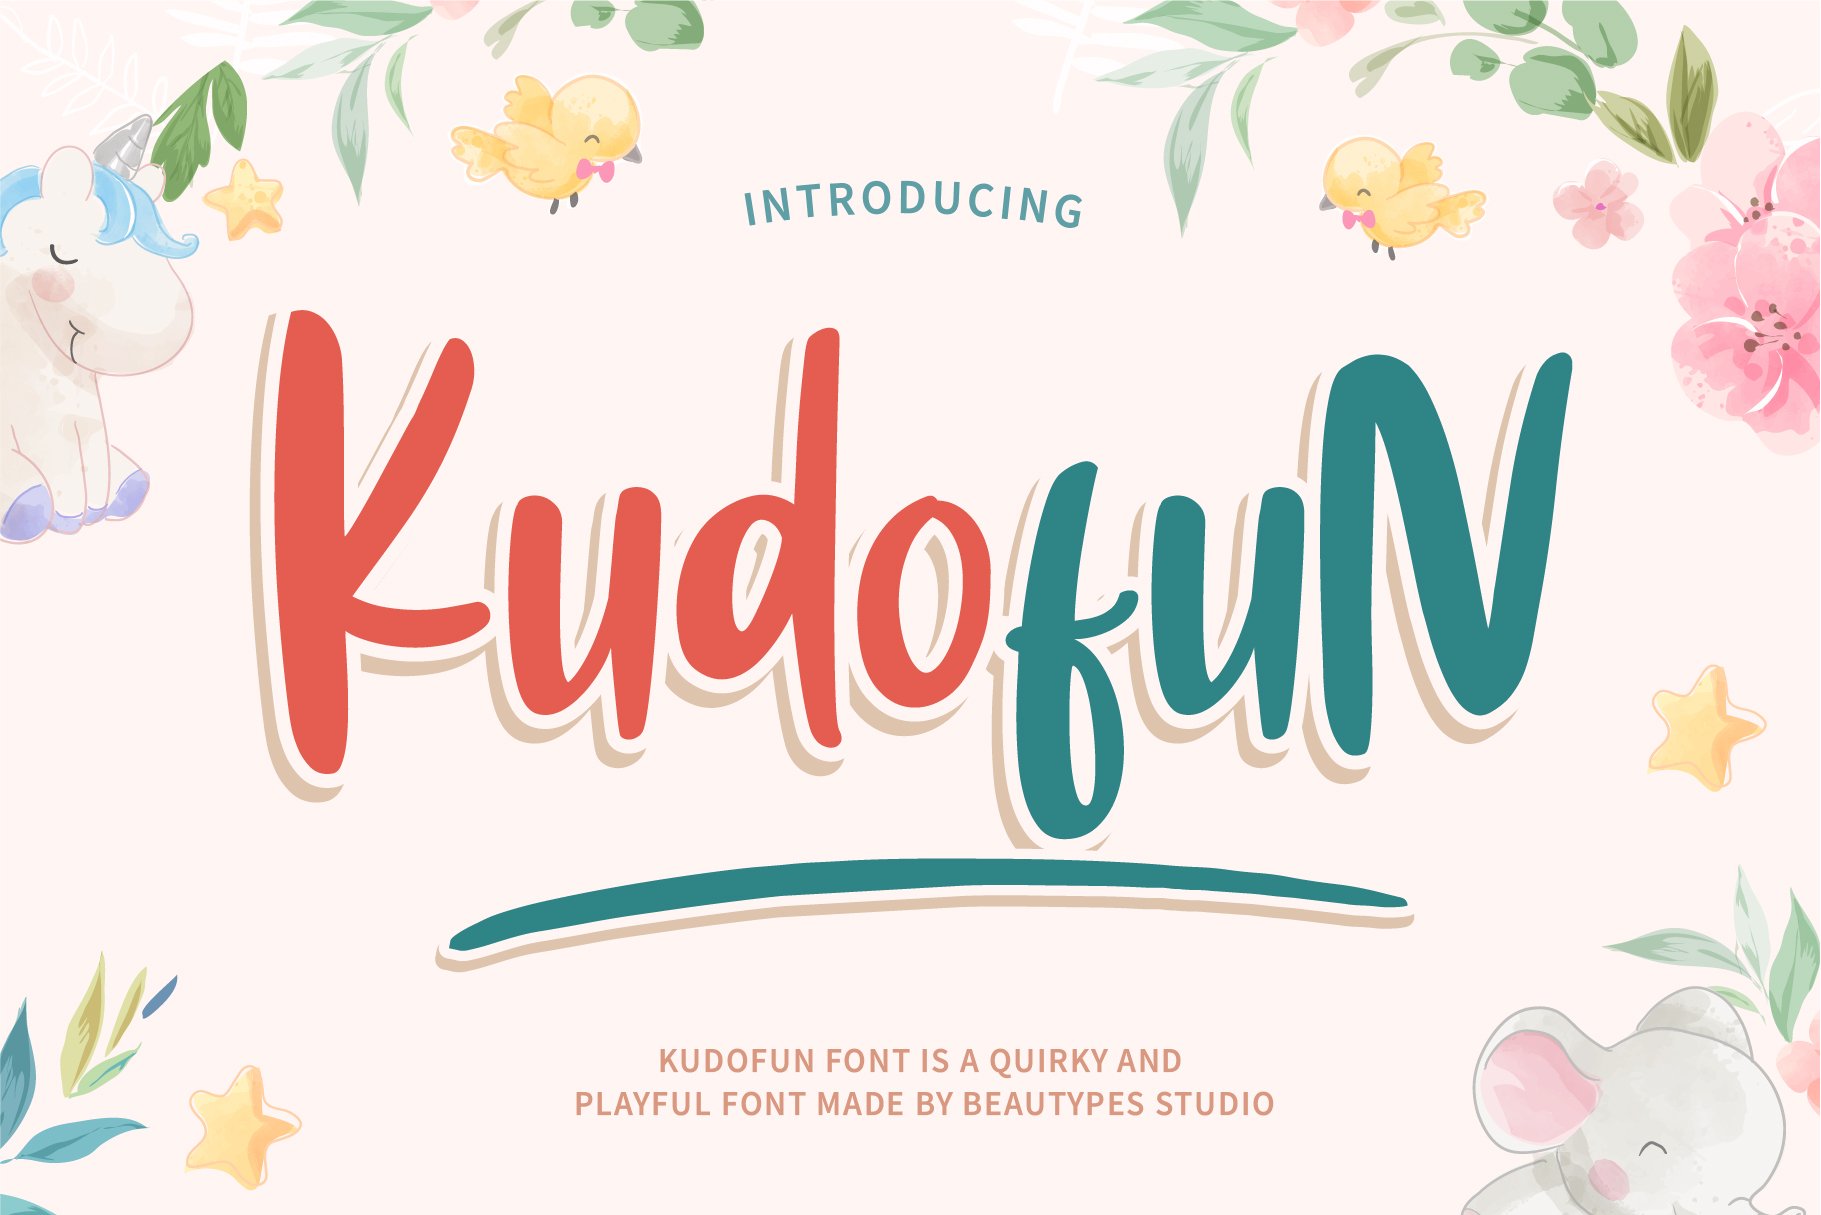 Kudofun - Stunning Display Font cover image.